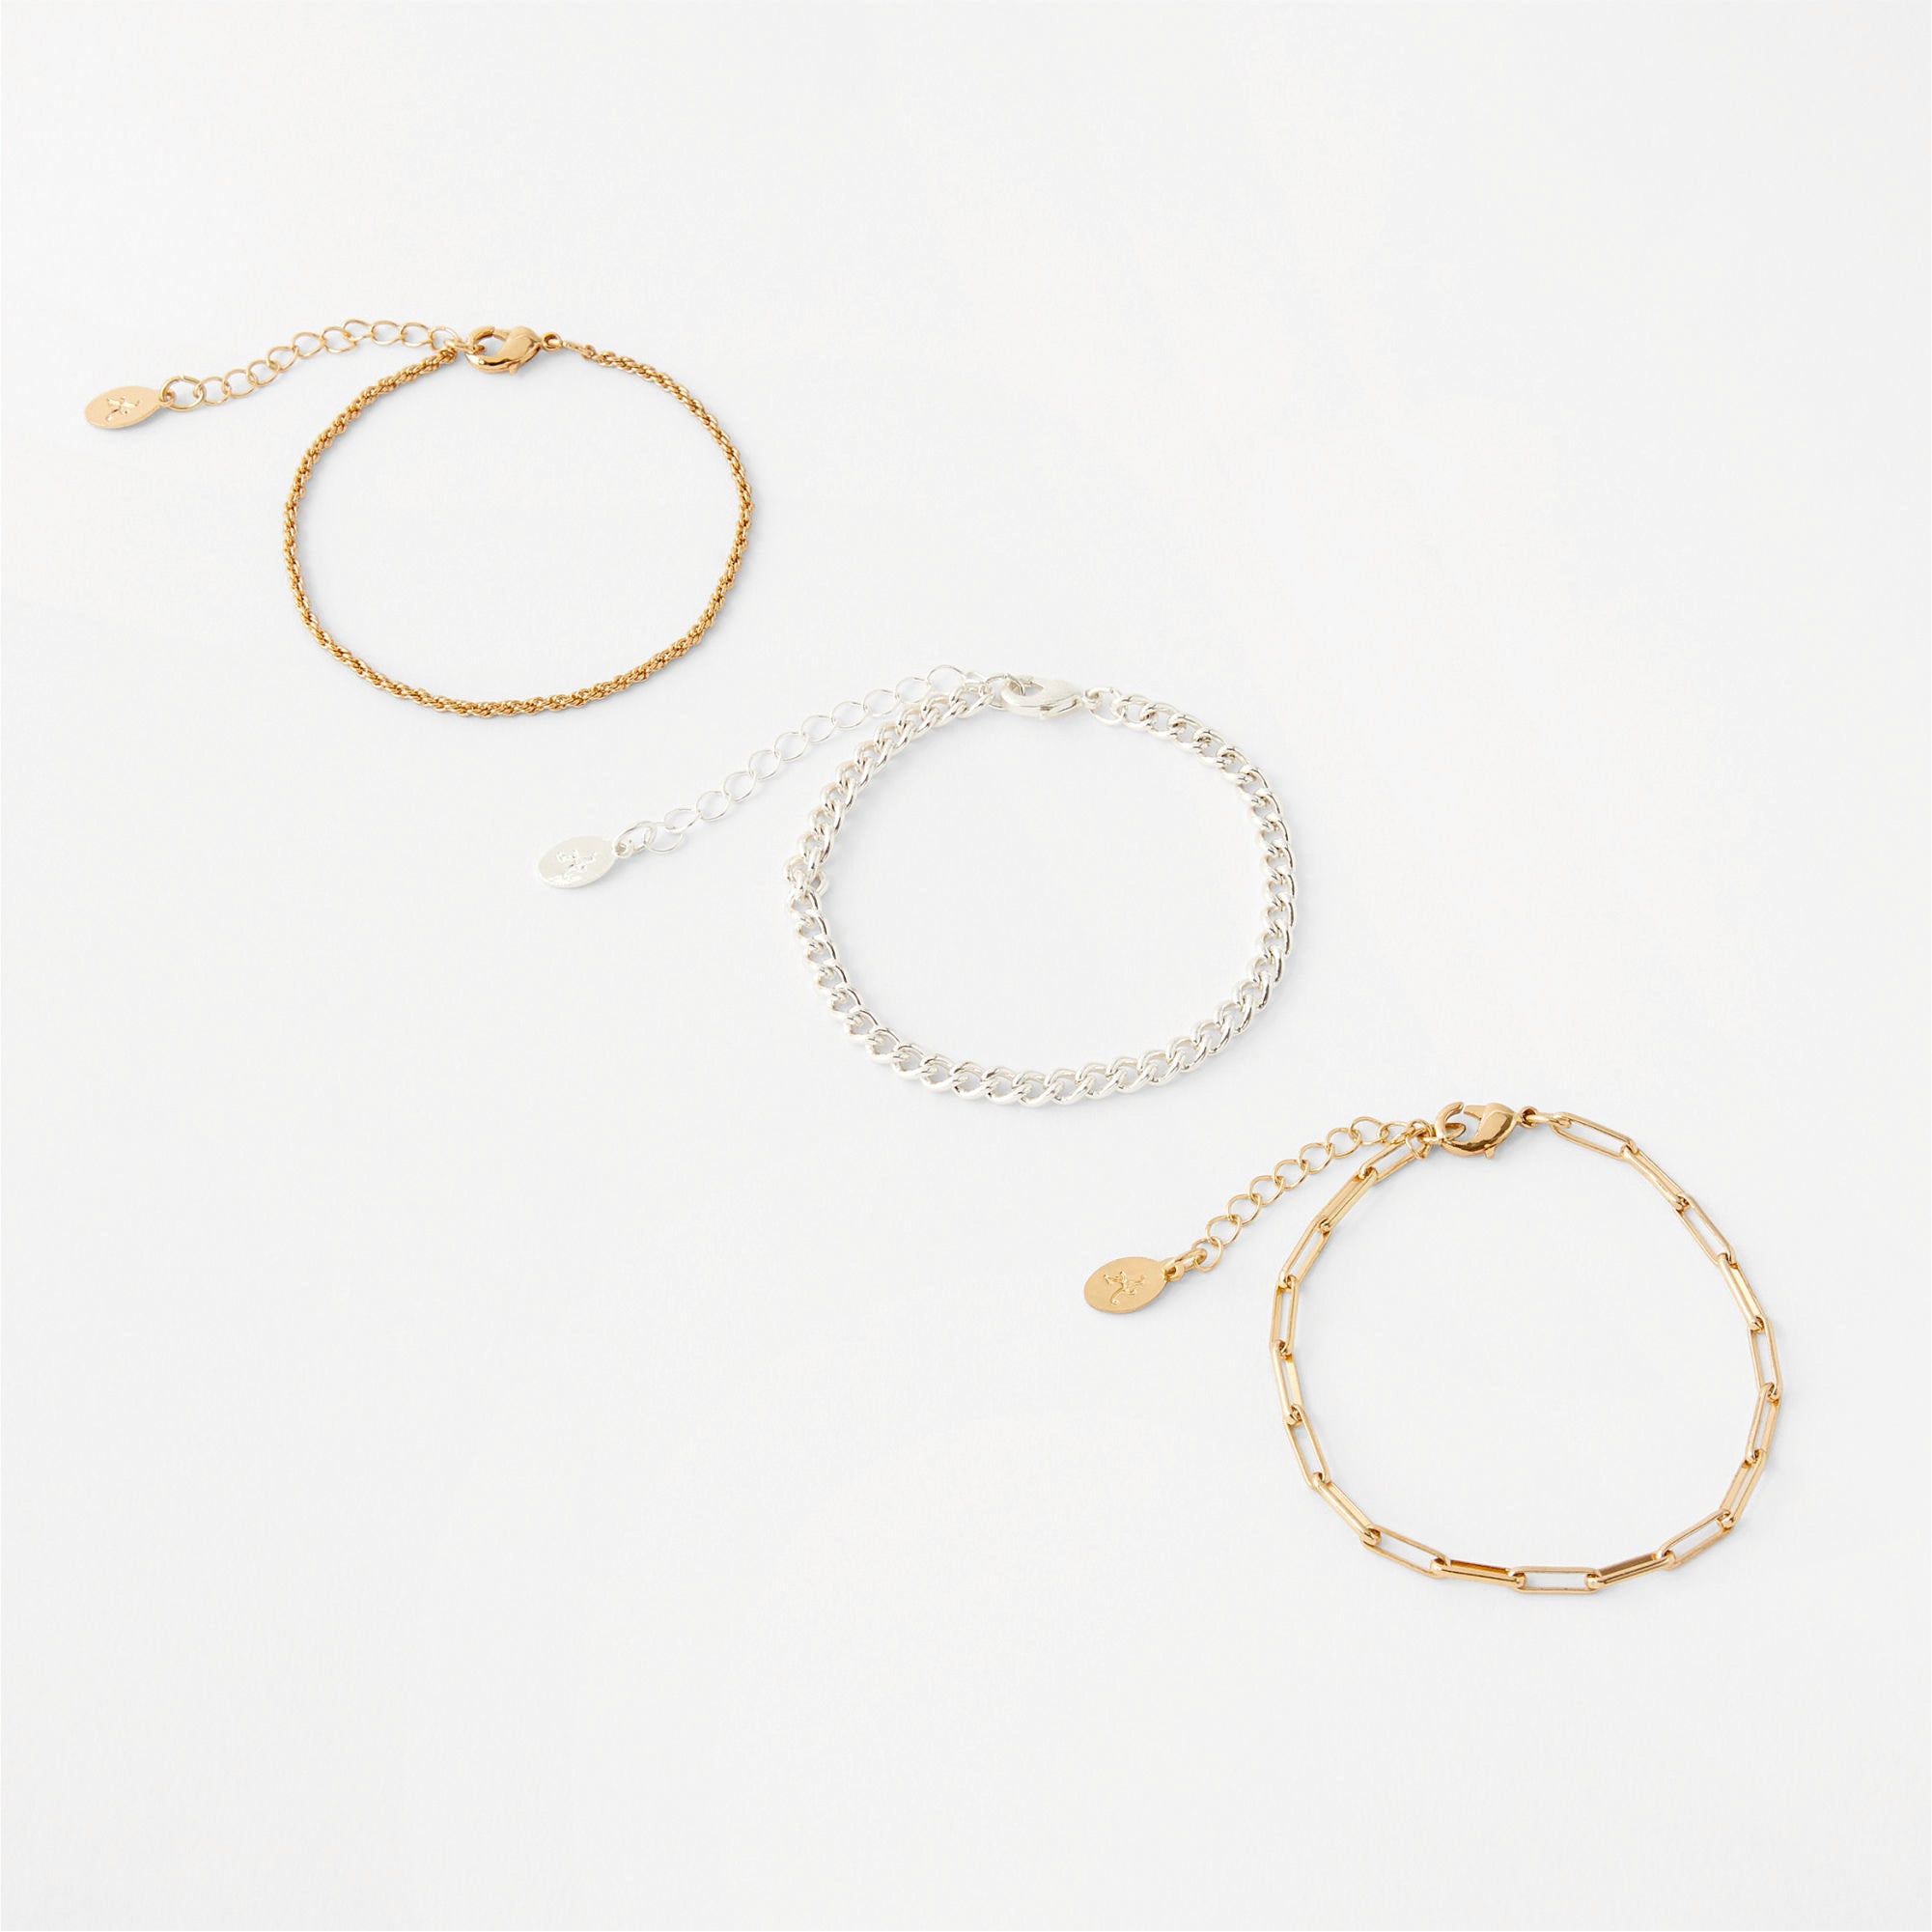 DYLAN LEX | Celeste Bracelets | A 3 in 1 Bracelet Set – DYLANLEX